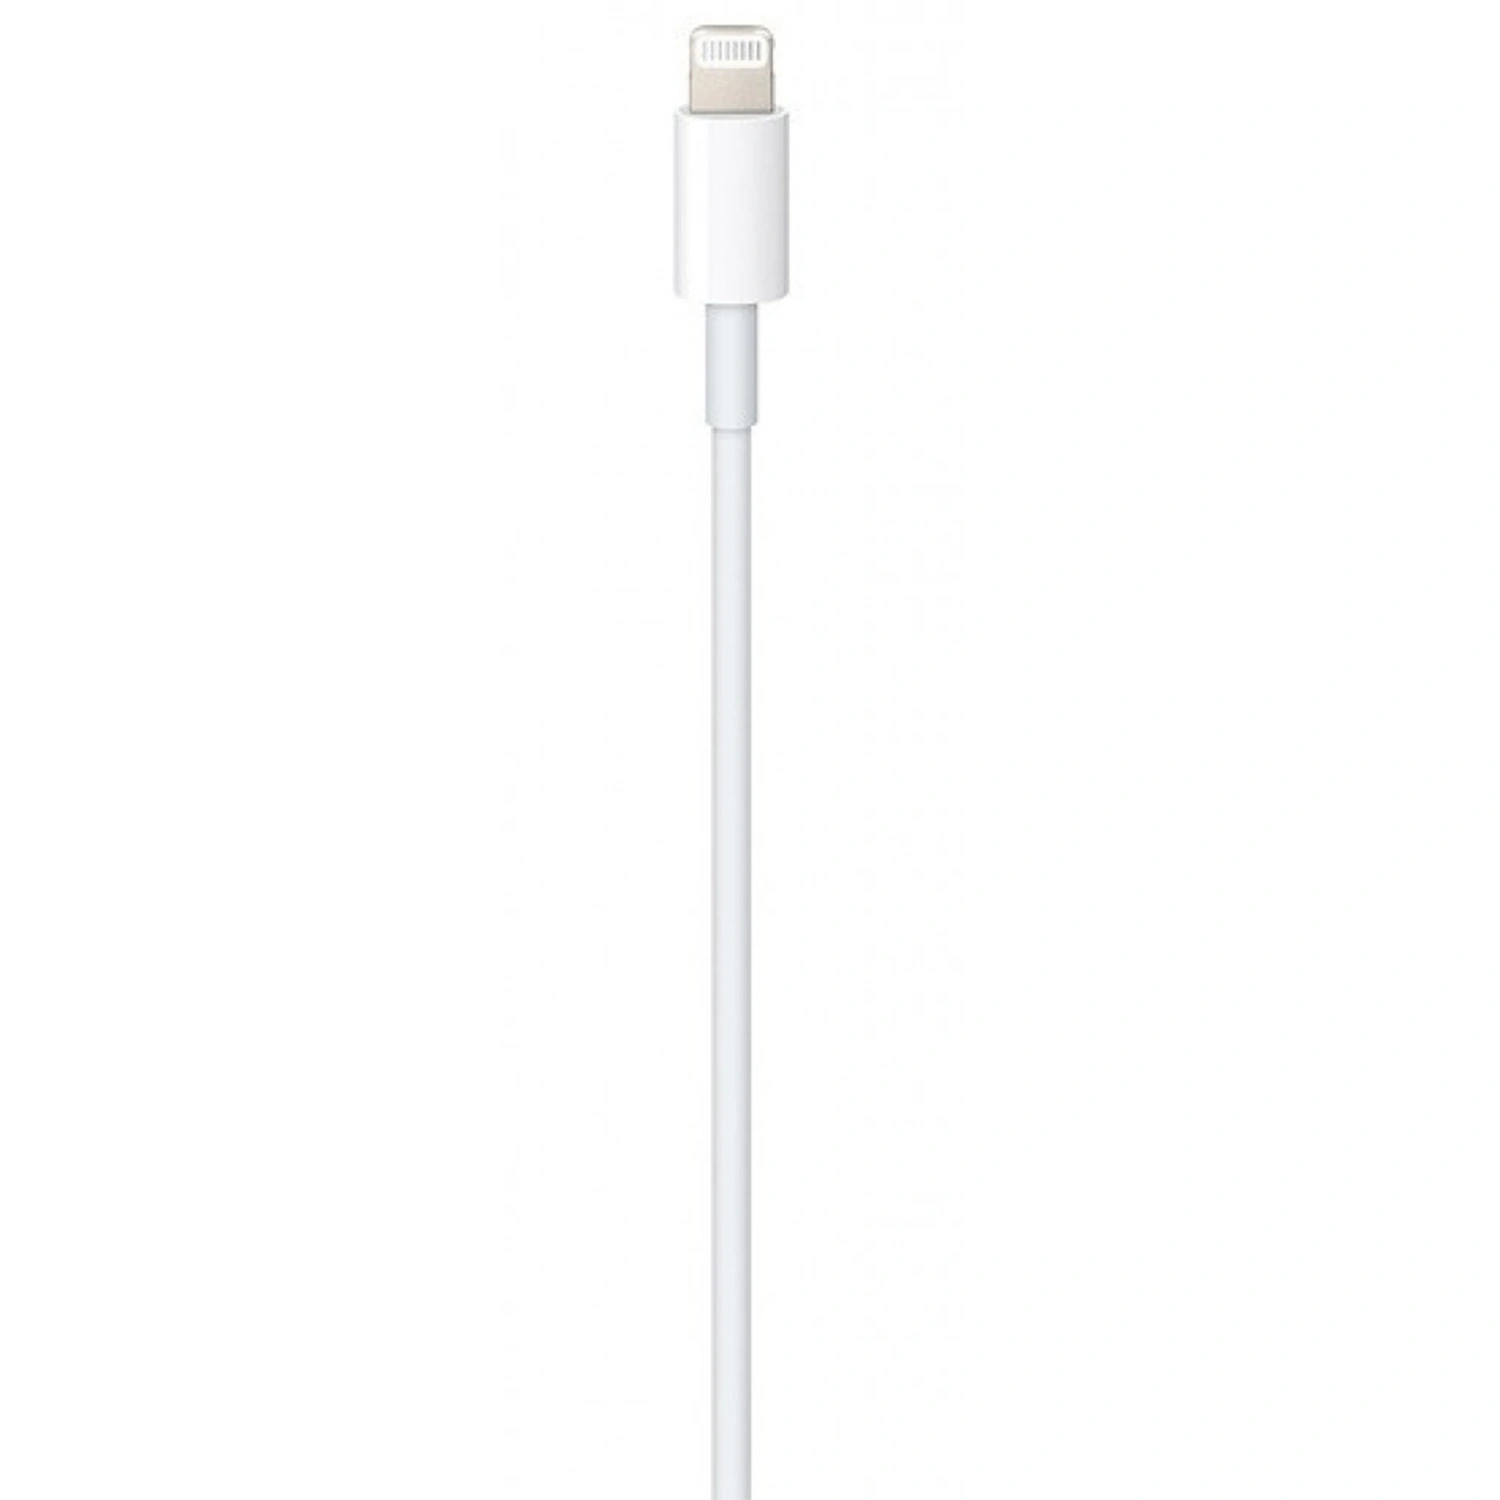 Зарядка lightning usb c. Кабель Apple USB Type-c - Lightning (mqgj2zm/a) 1 м. Apple кабель USB-C/Lightning 2 м. Кабель Apple USB - Lightning mxly2zm/a (1 метр). Кабель Apple USB - Lightning (md819zm/a) 2 м.